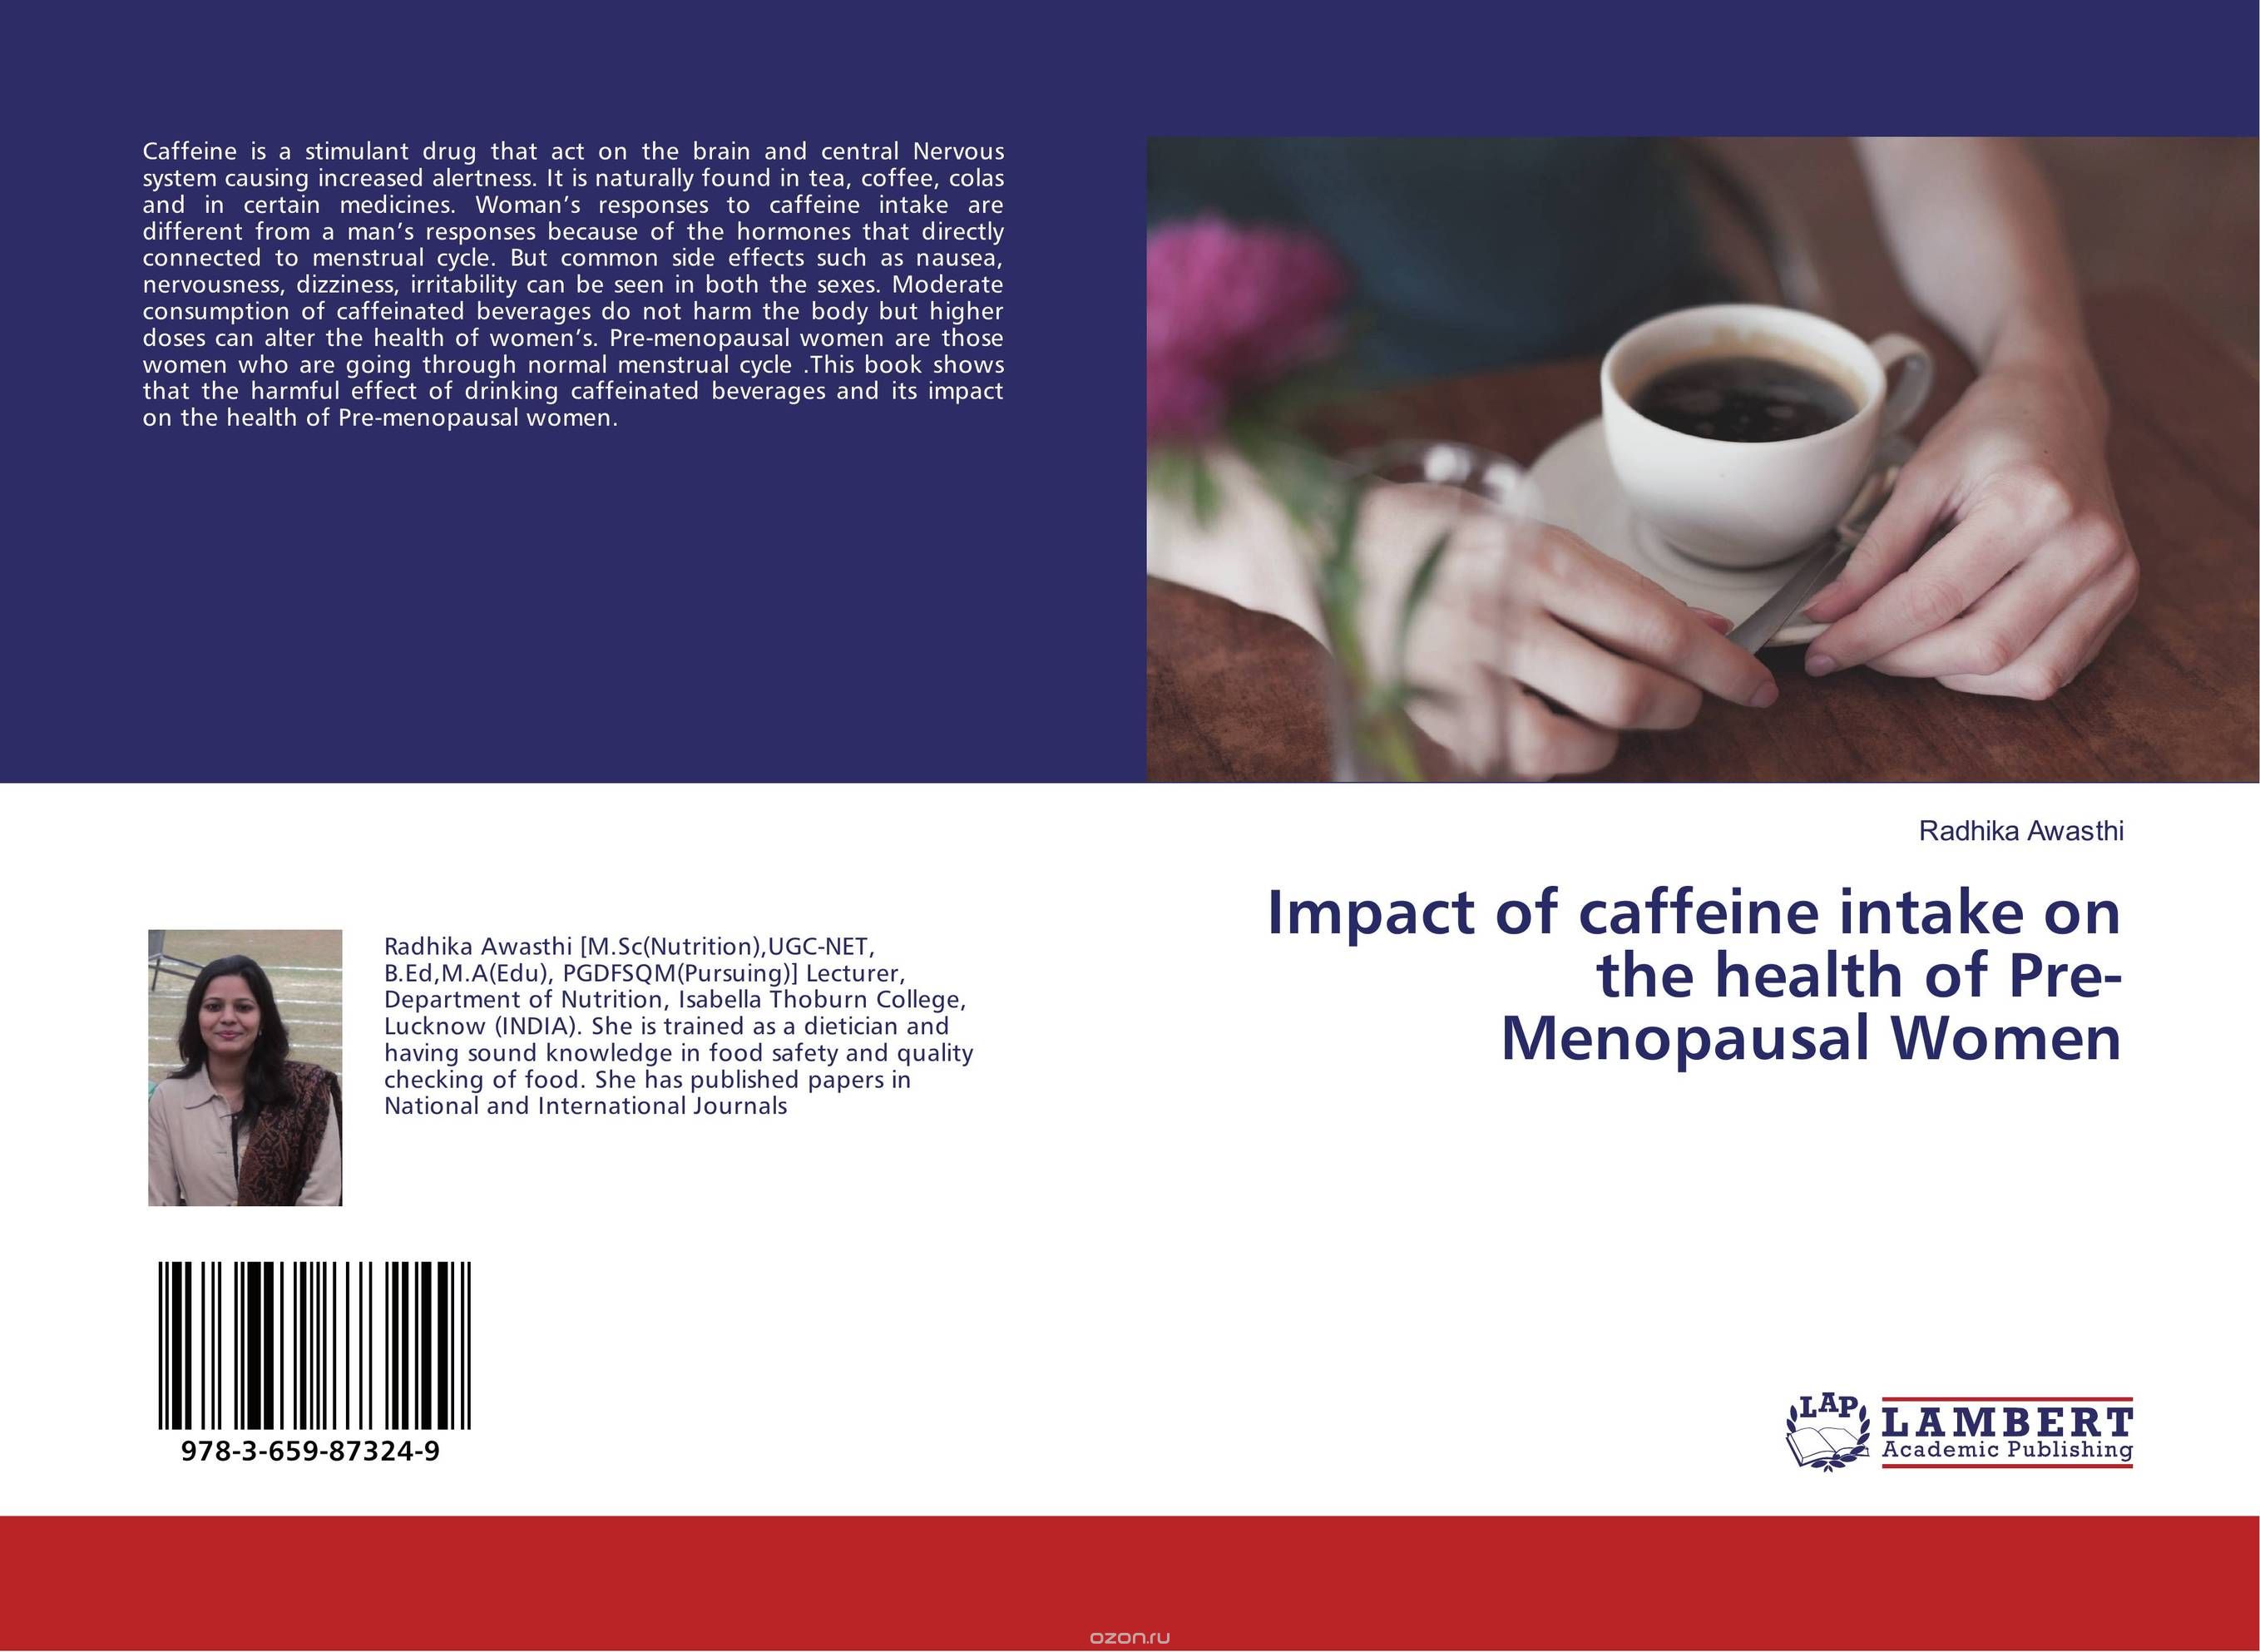 Impact of caffeine intake on the health of Pre-Menopausal Women